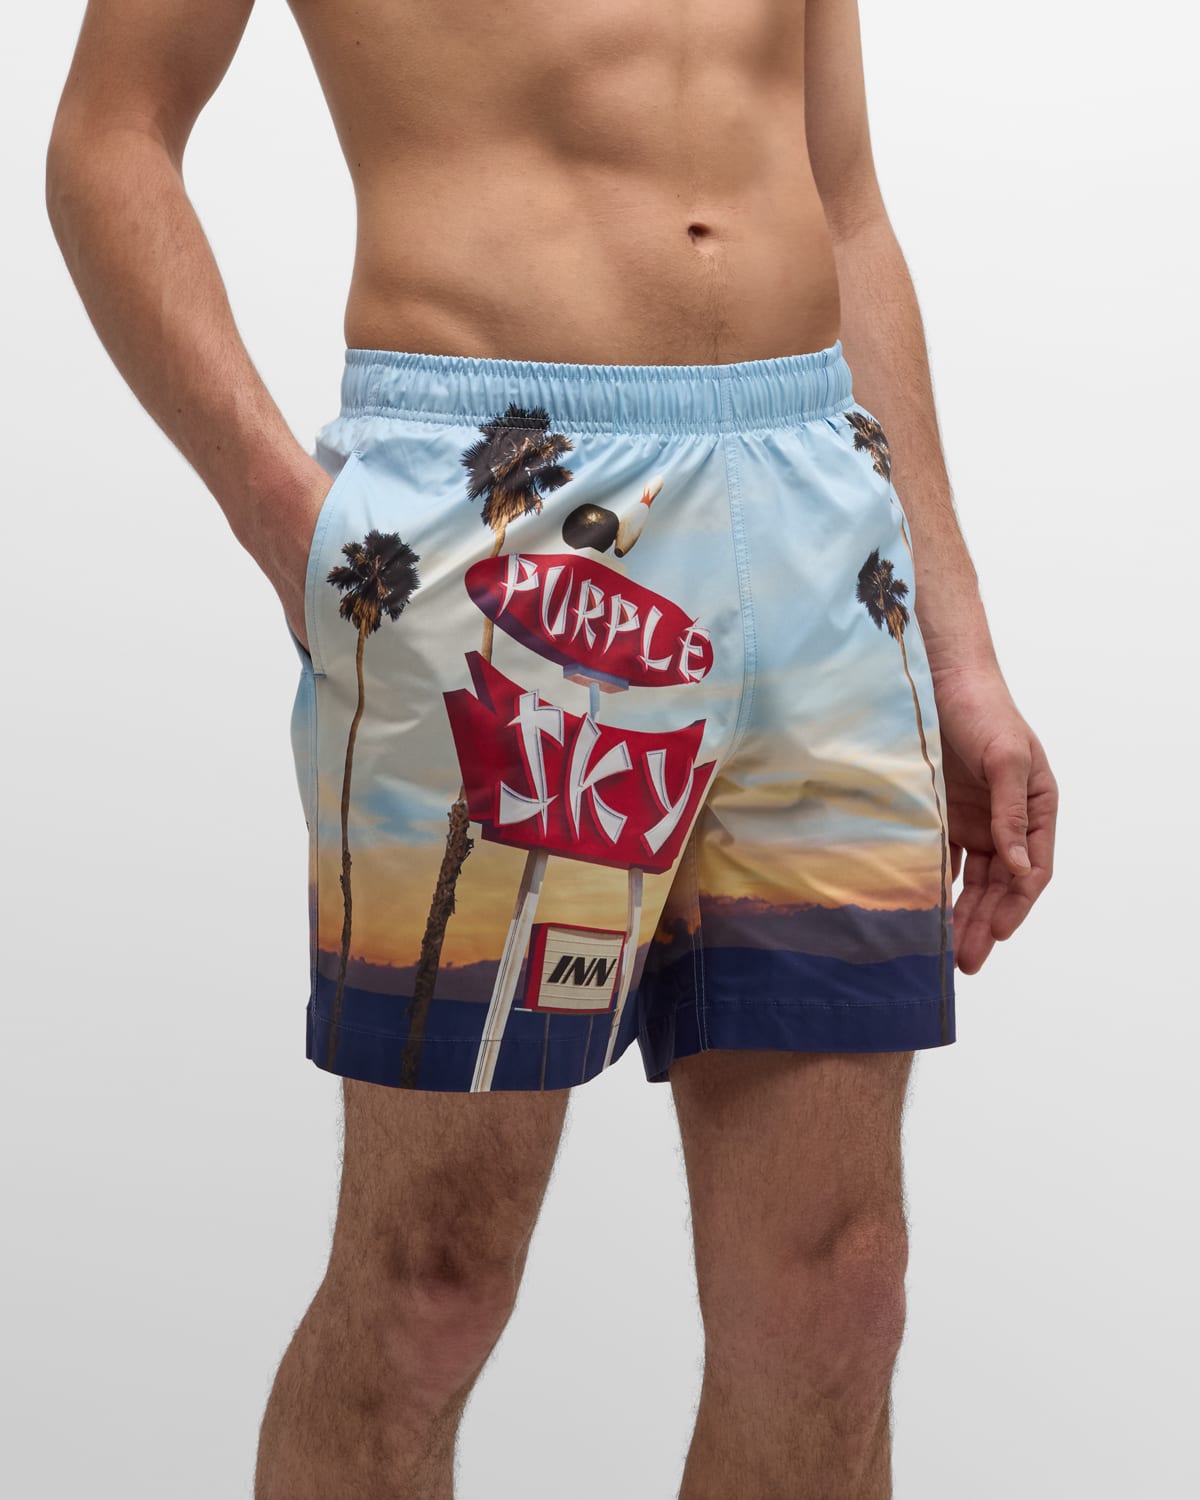 Purple X Blue Sky Inn Men's Printed Pull-on Shorts In All Around Short